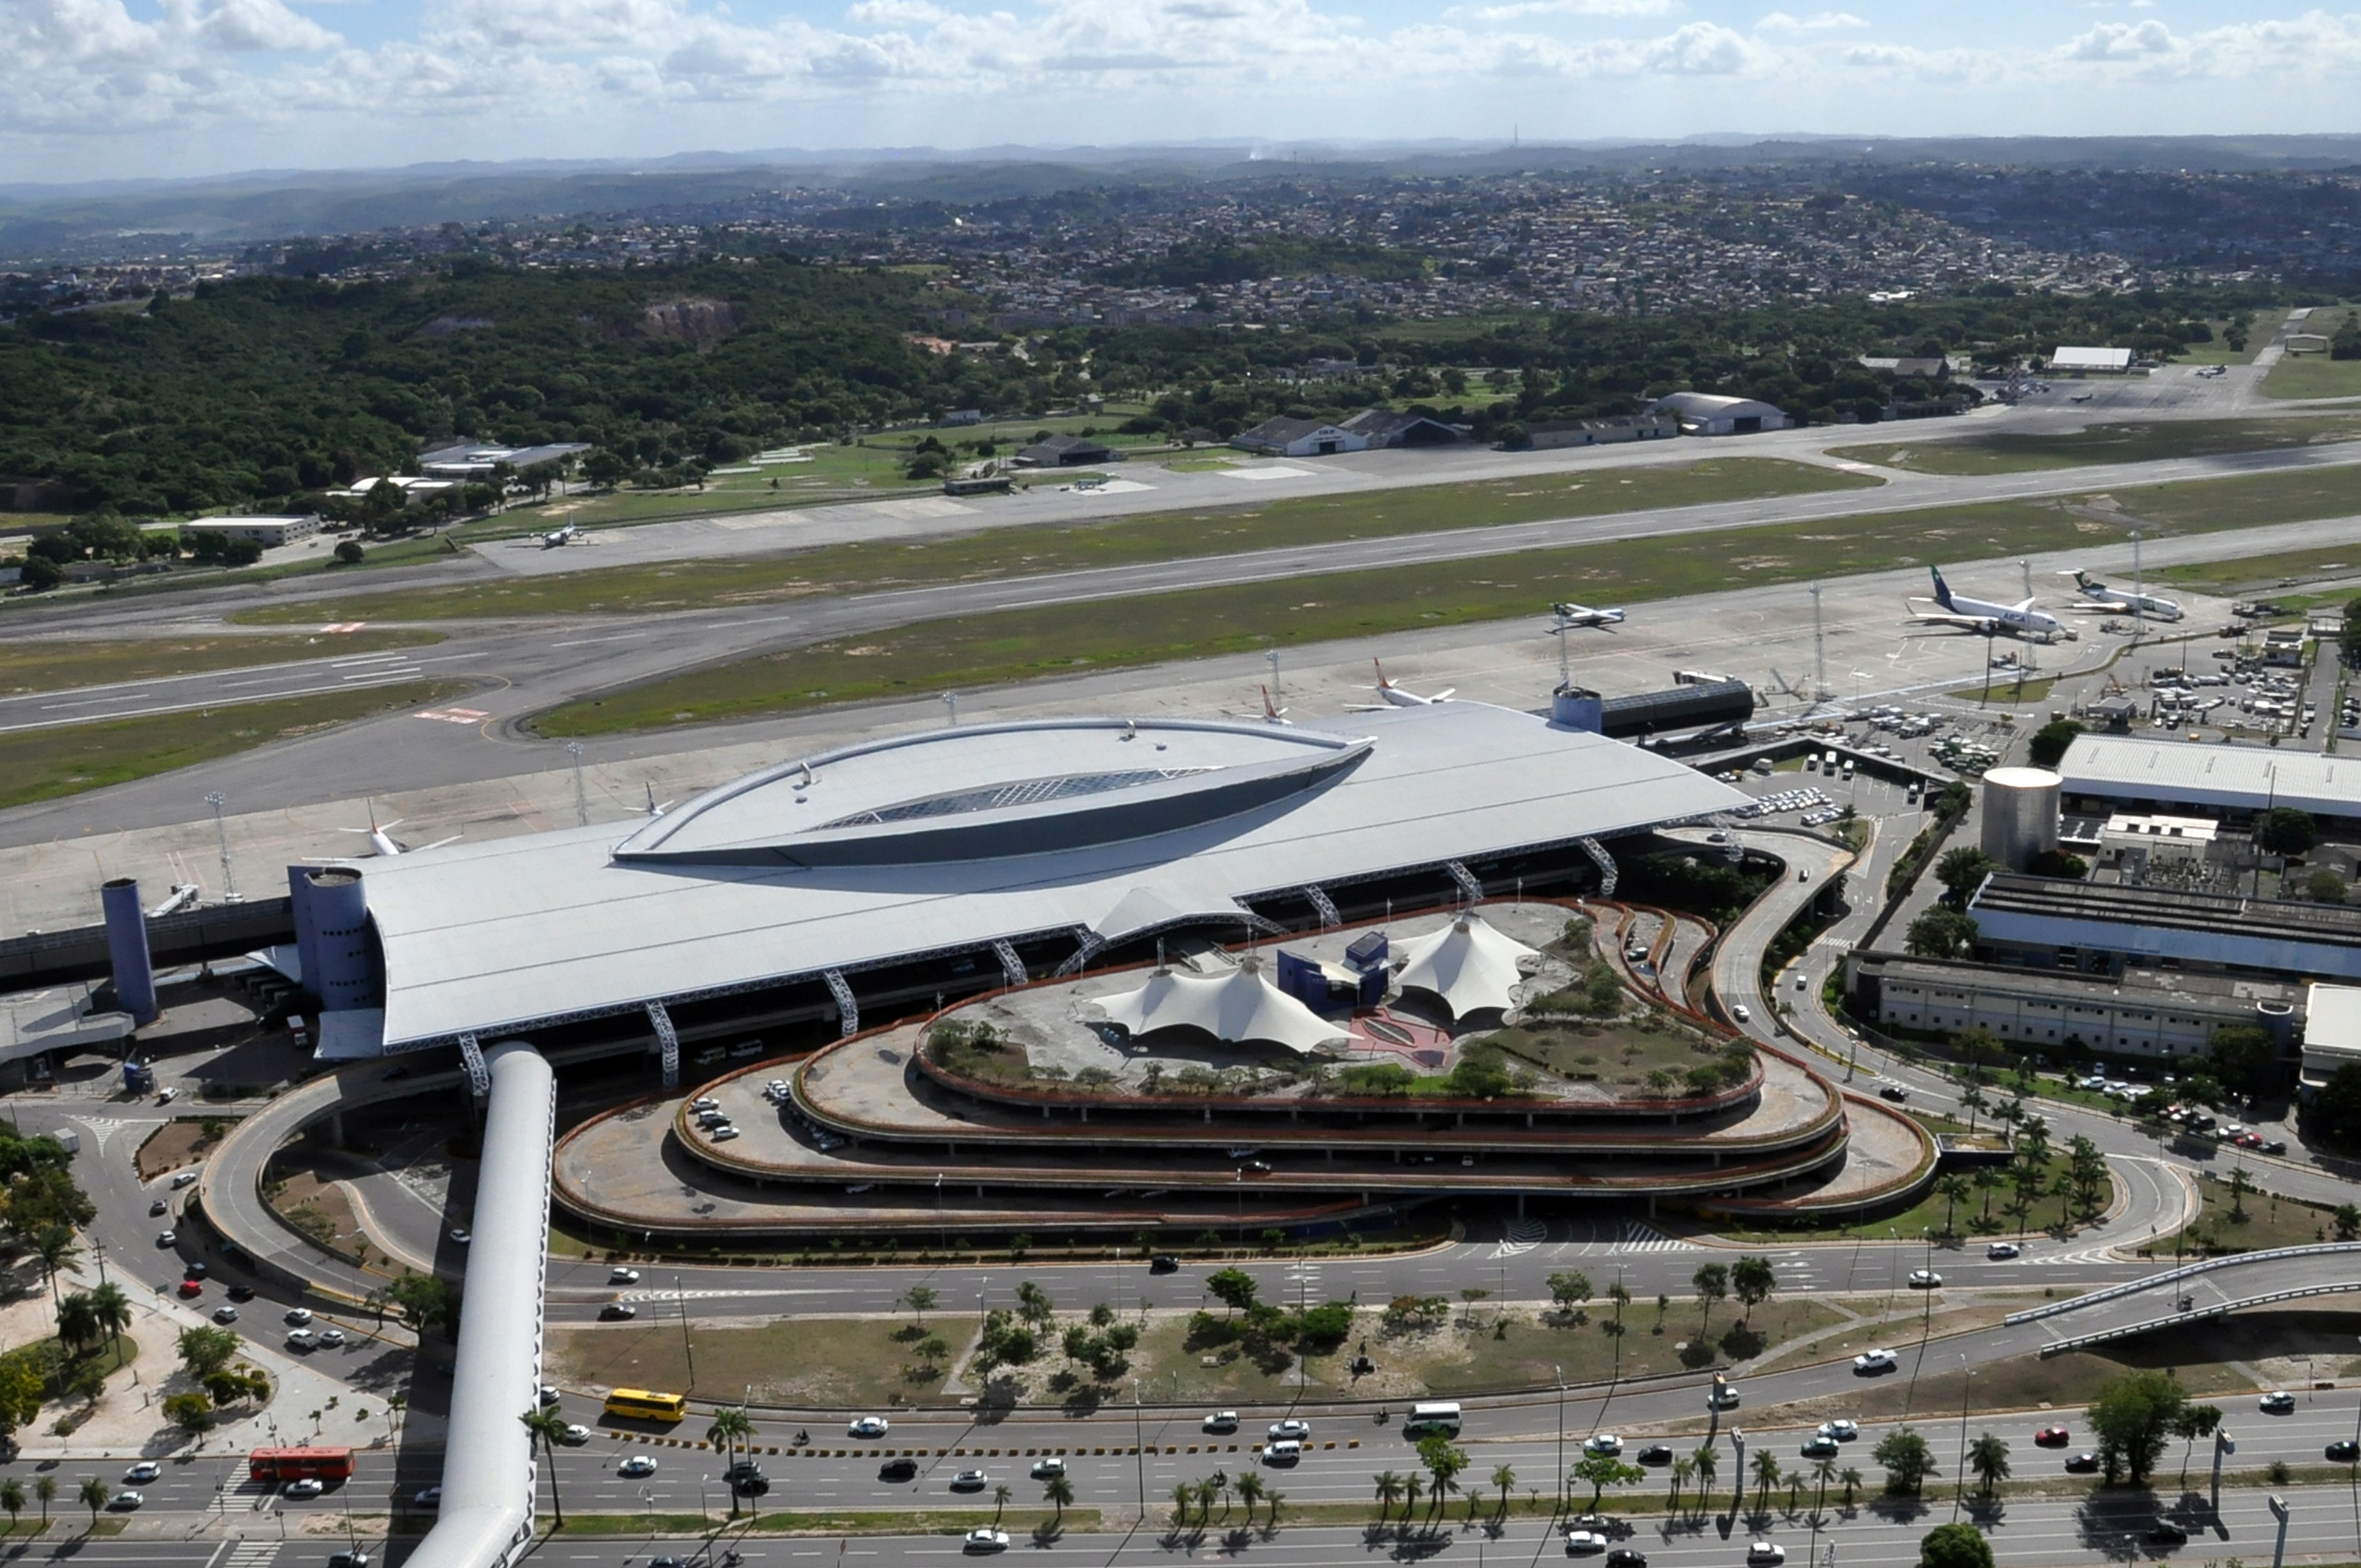 Aeroporto Internacional do Recife